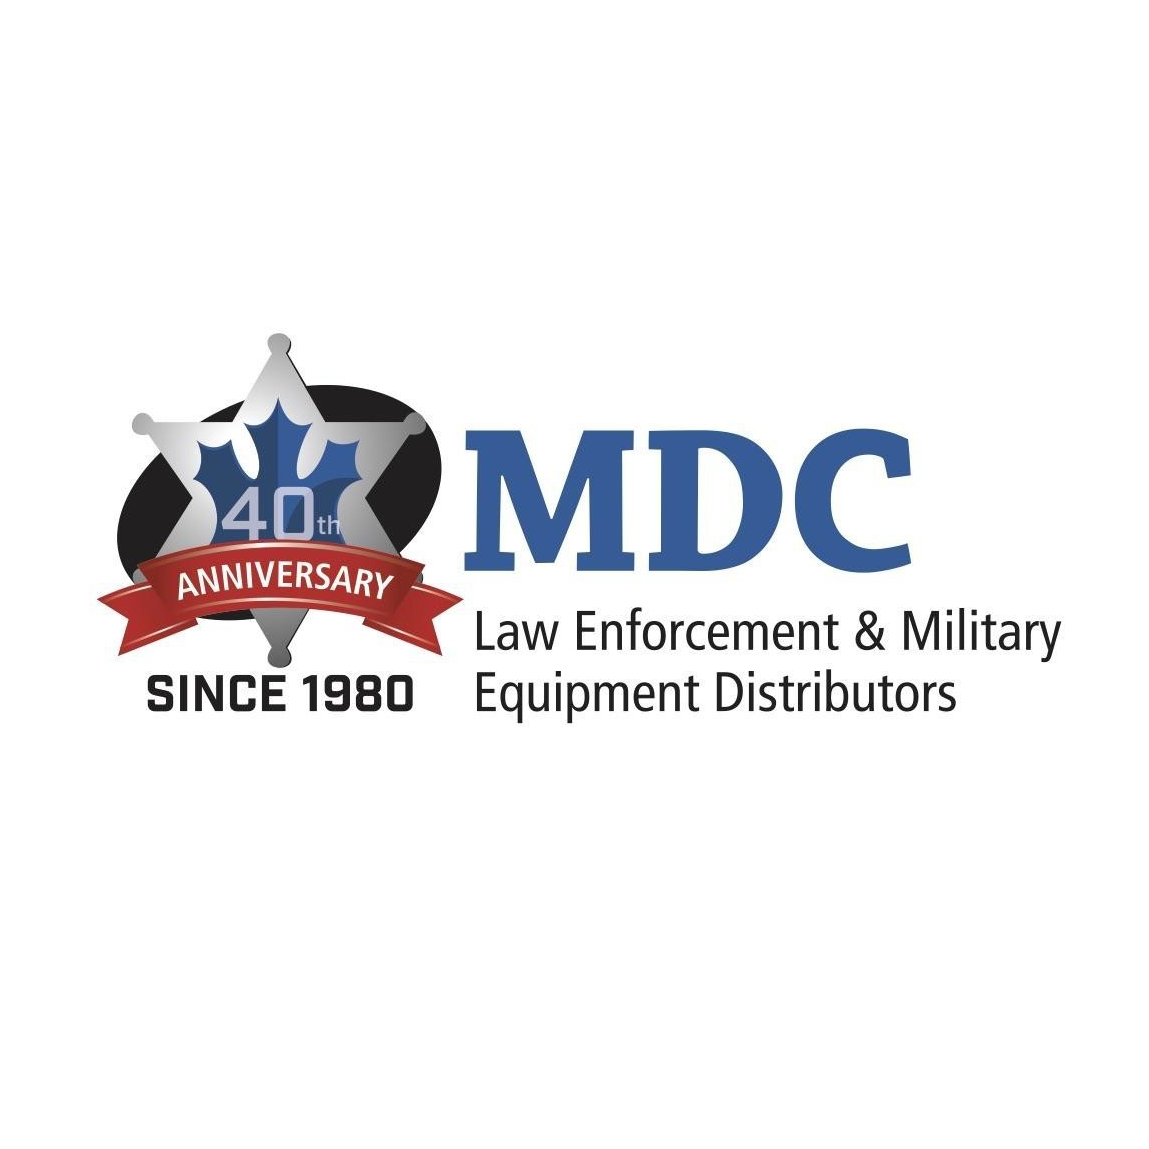 MDC (M D Charlton Company) Law Enforcement & Military Equipment Distributors